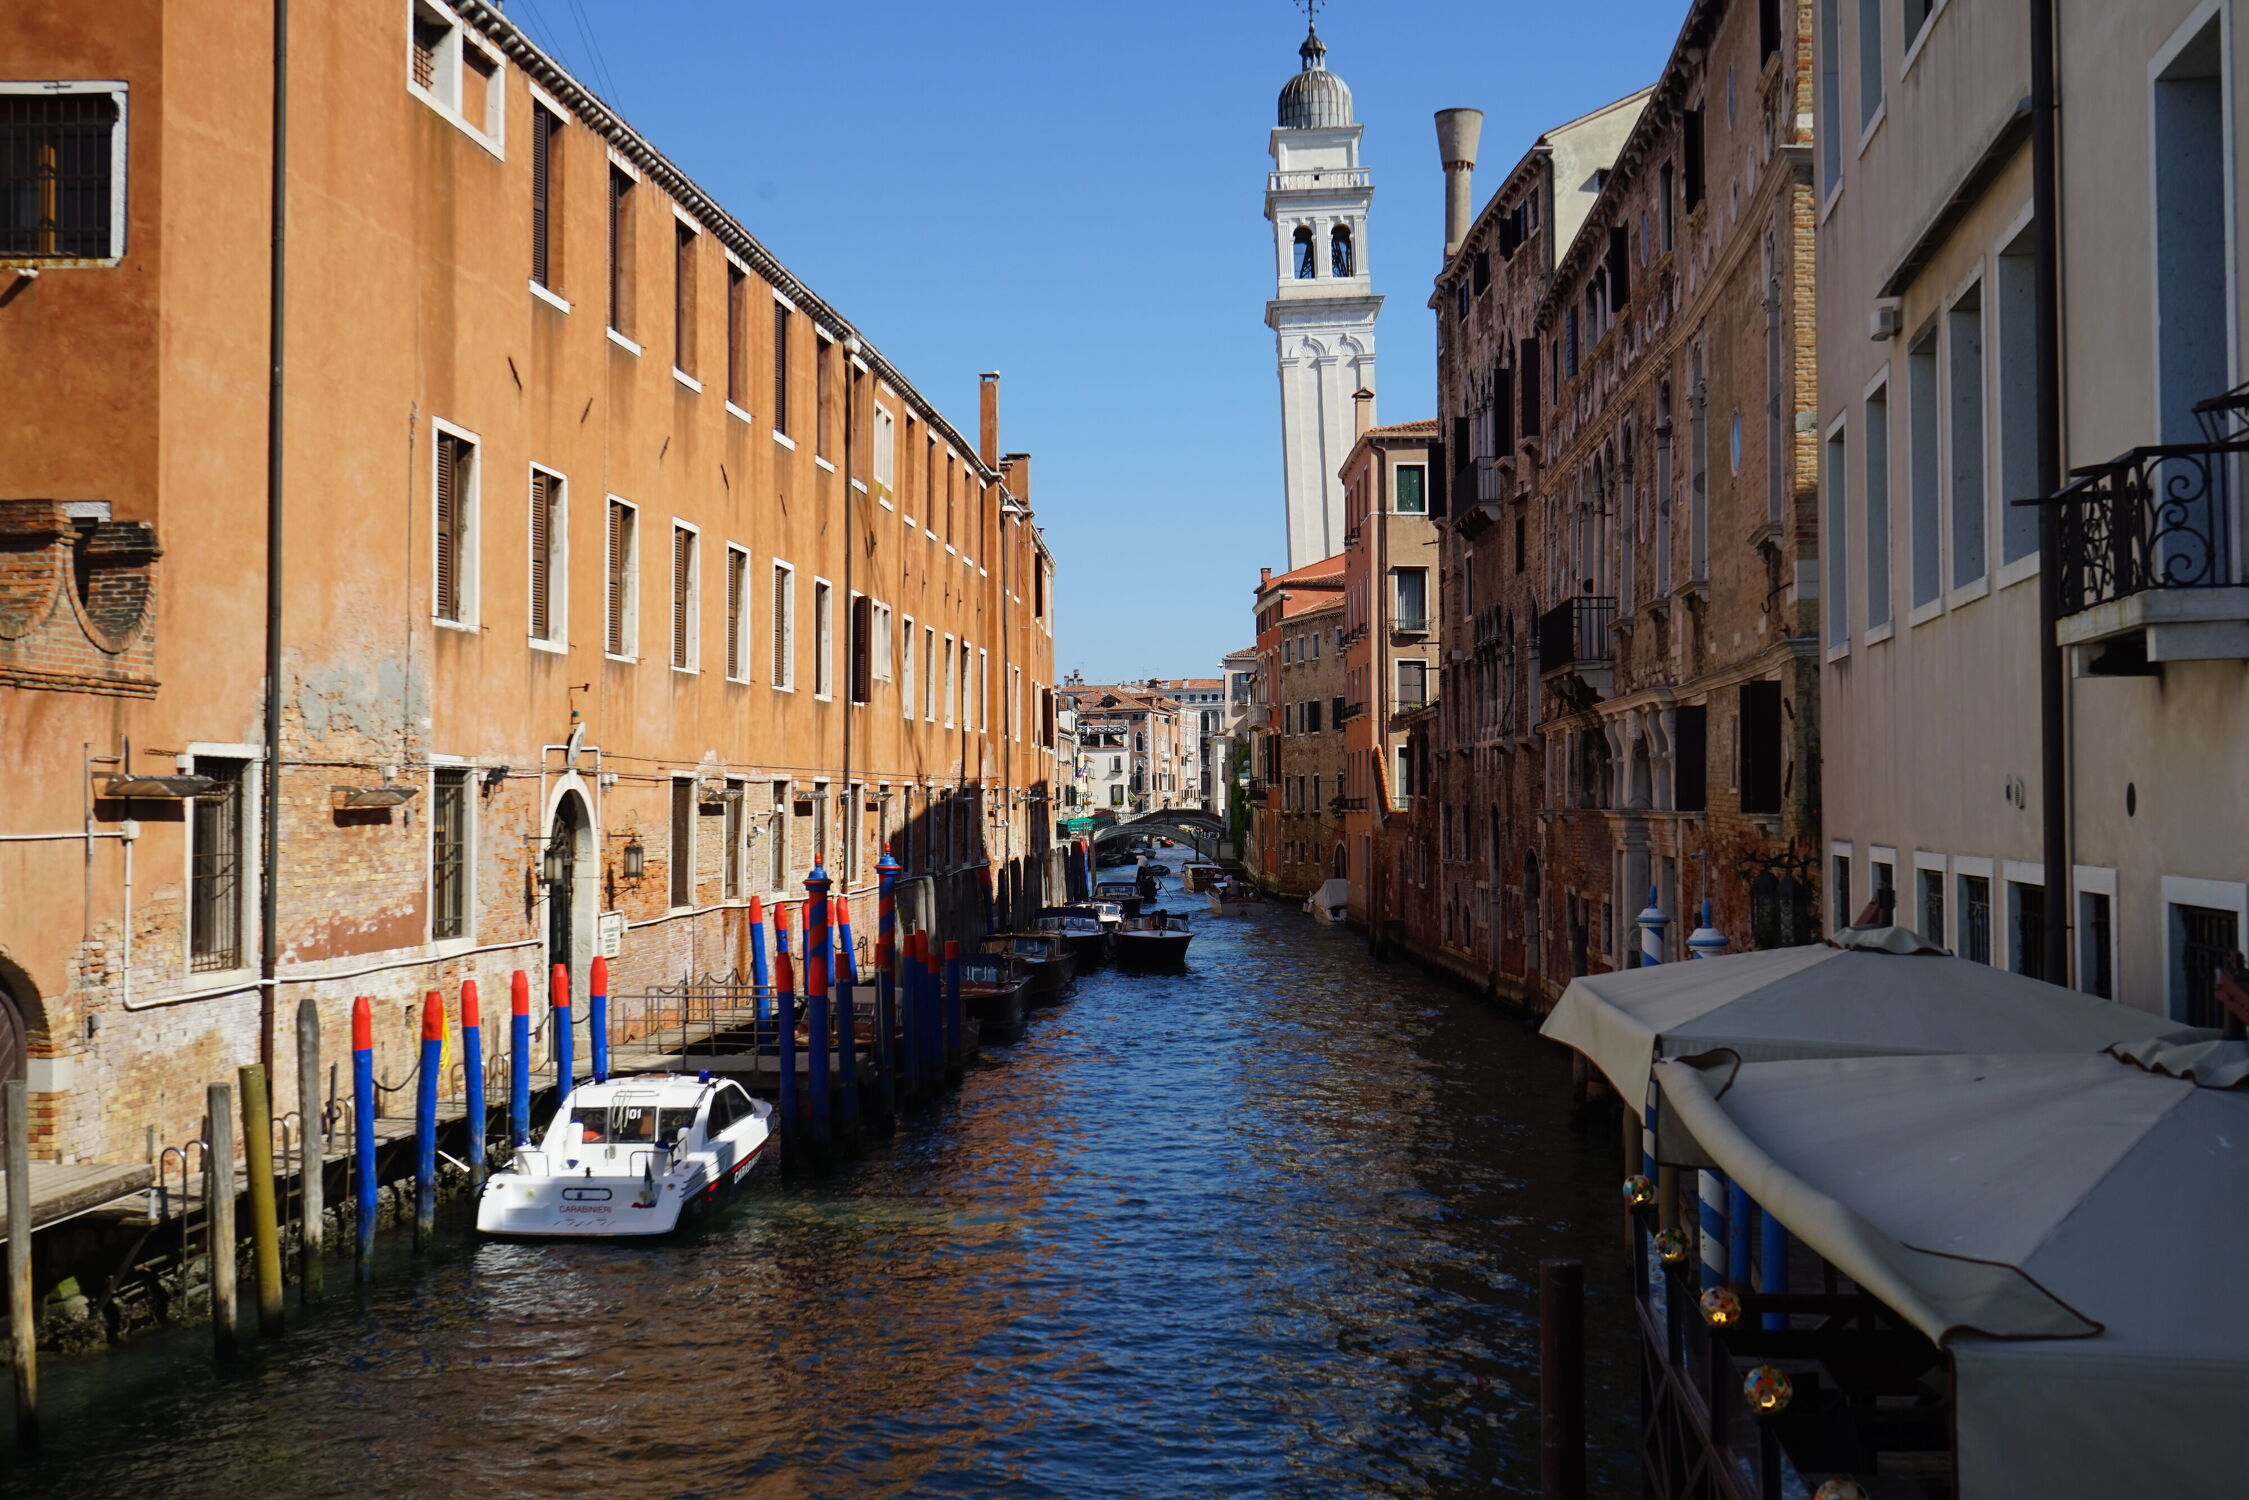 Bild mit Italien, venedig, Venezia